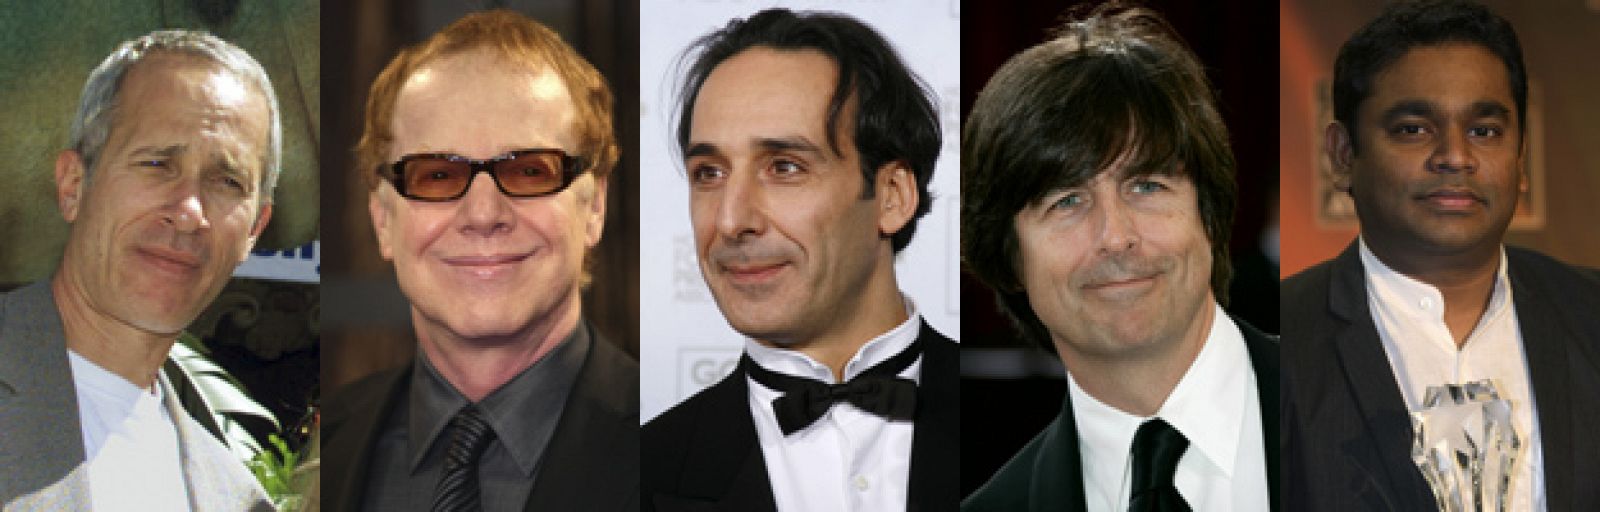 De izquierda a derecha: James Newton Howard, Danny Elfman, Alexandre Desplat, Thomas Newman y A.H.Rahman.